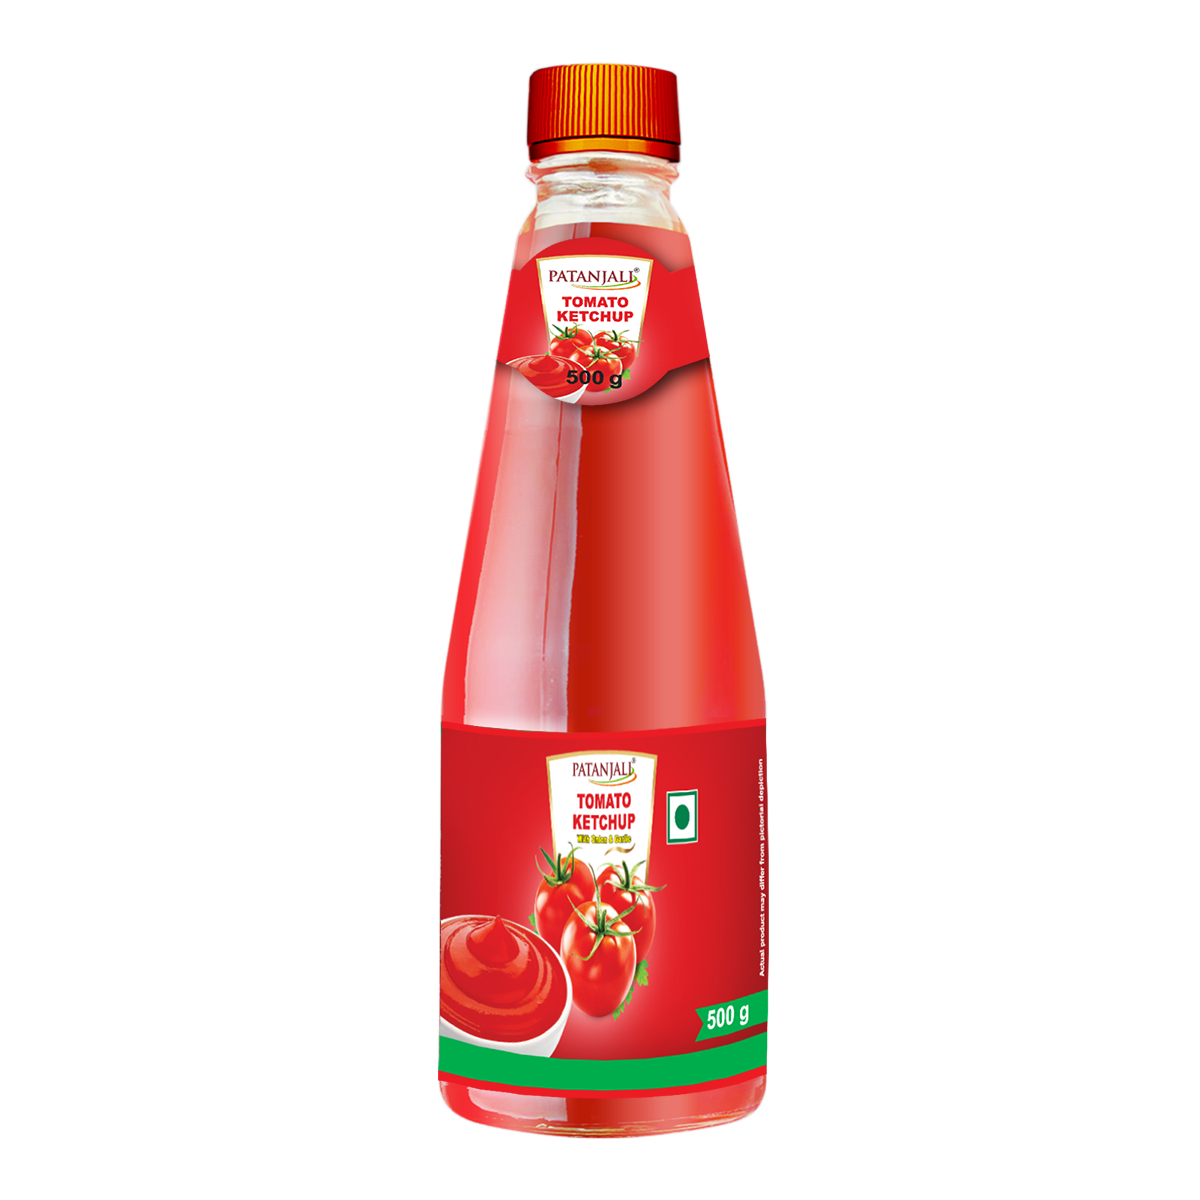 Patanjali Tomato Ketchup with Onion & Garlic